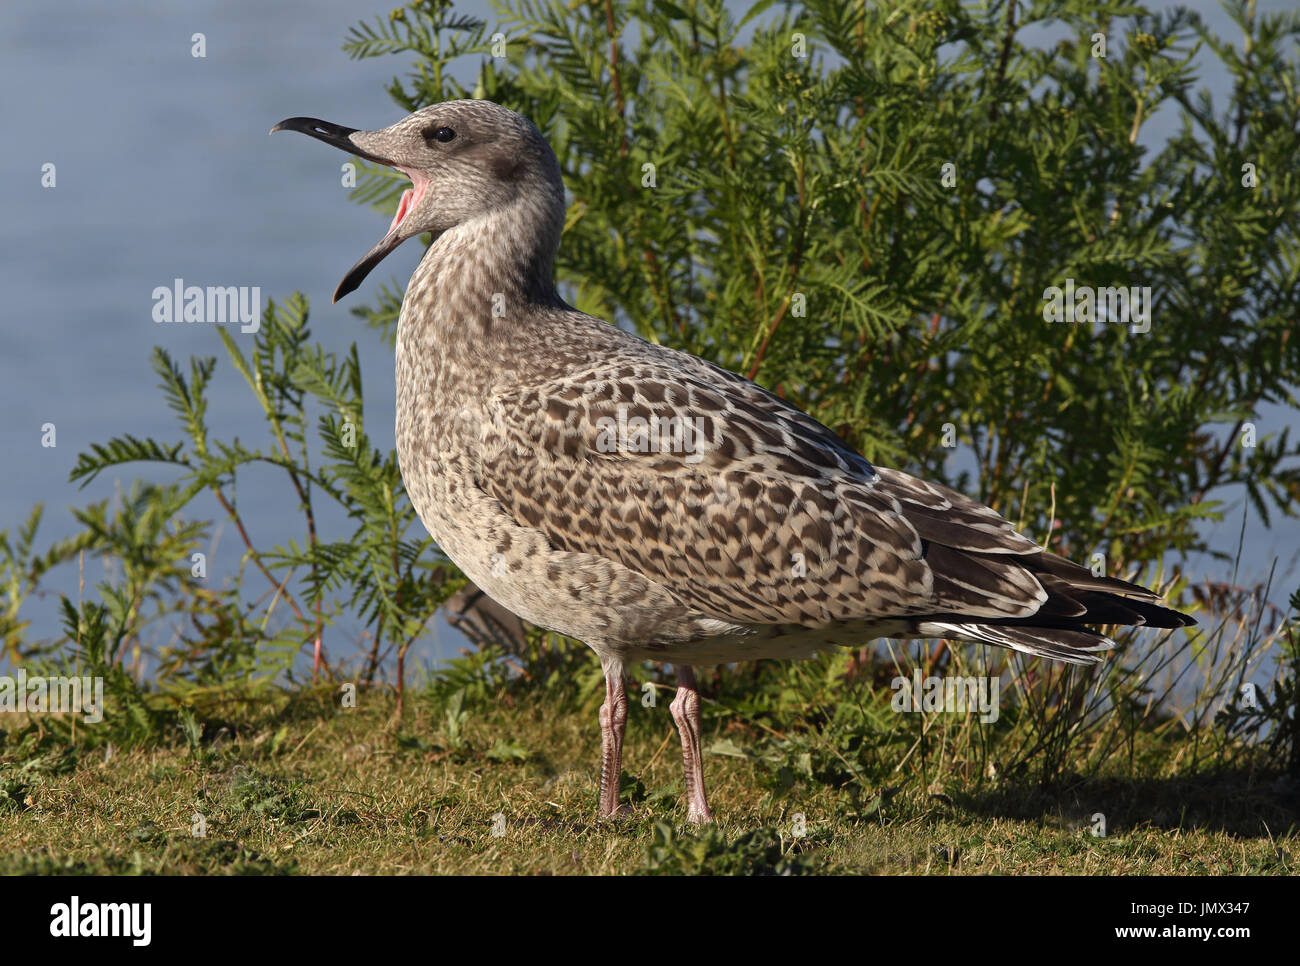 Young European herring gull with beak wide open Stock Photo